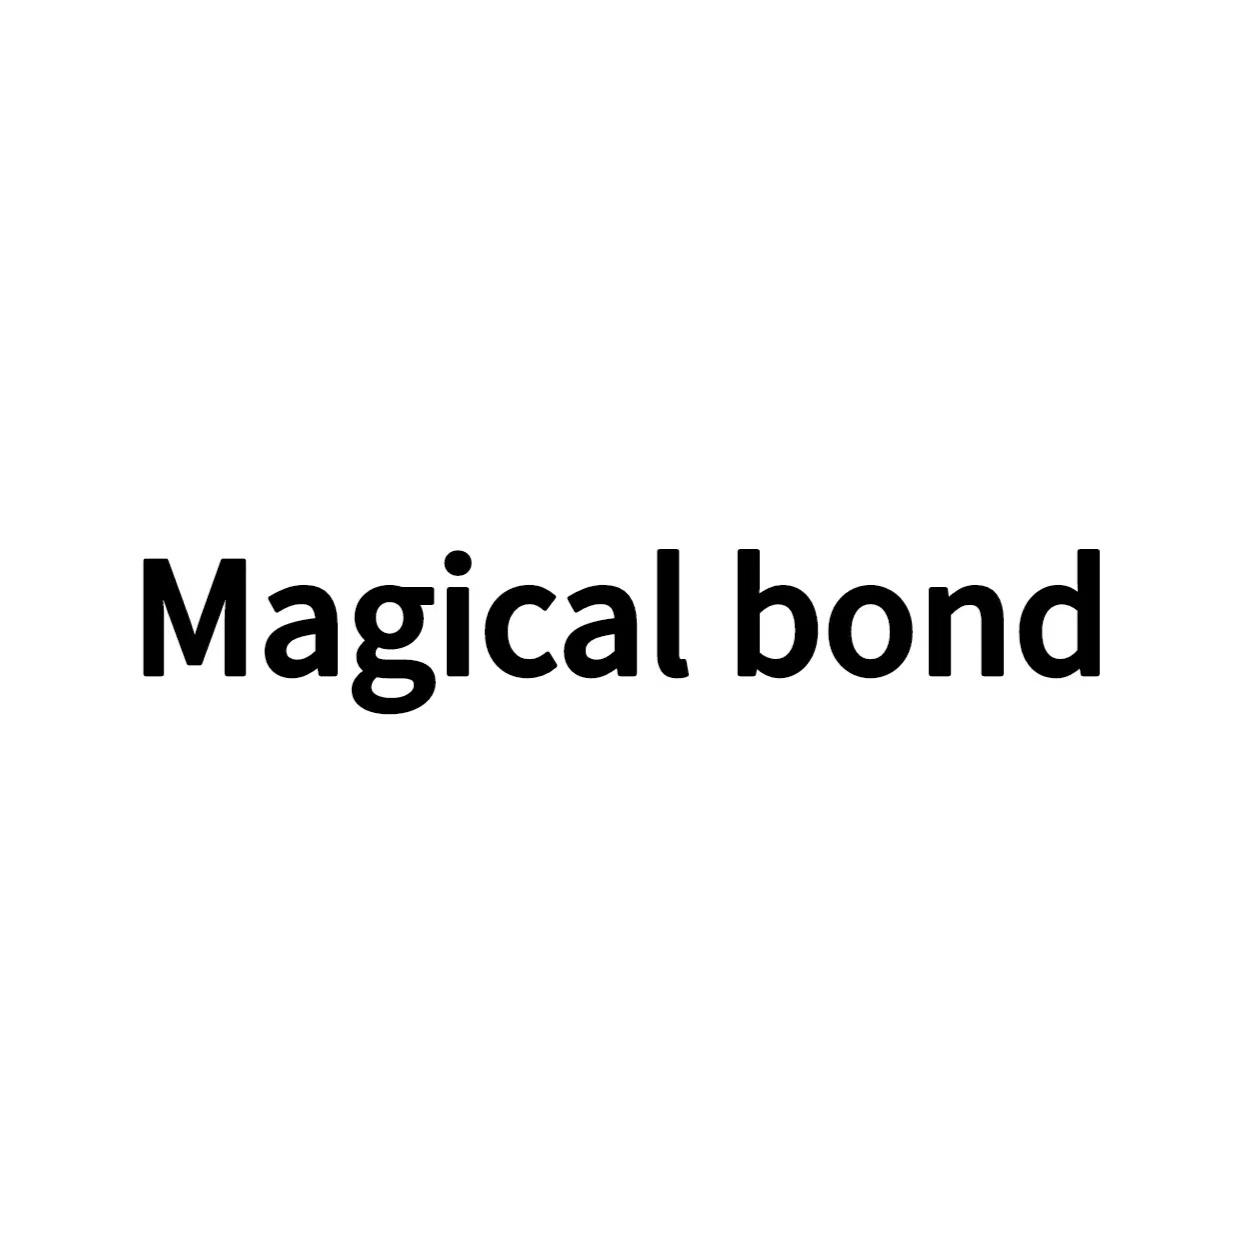 MAGICAL BOND